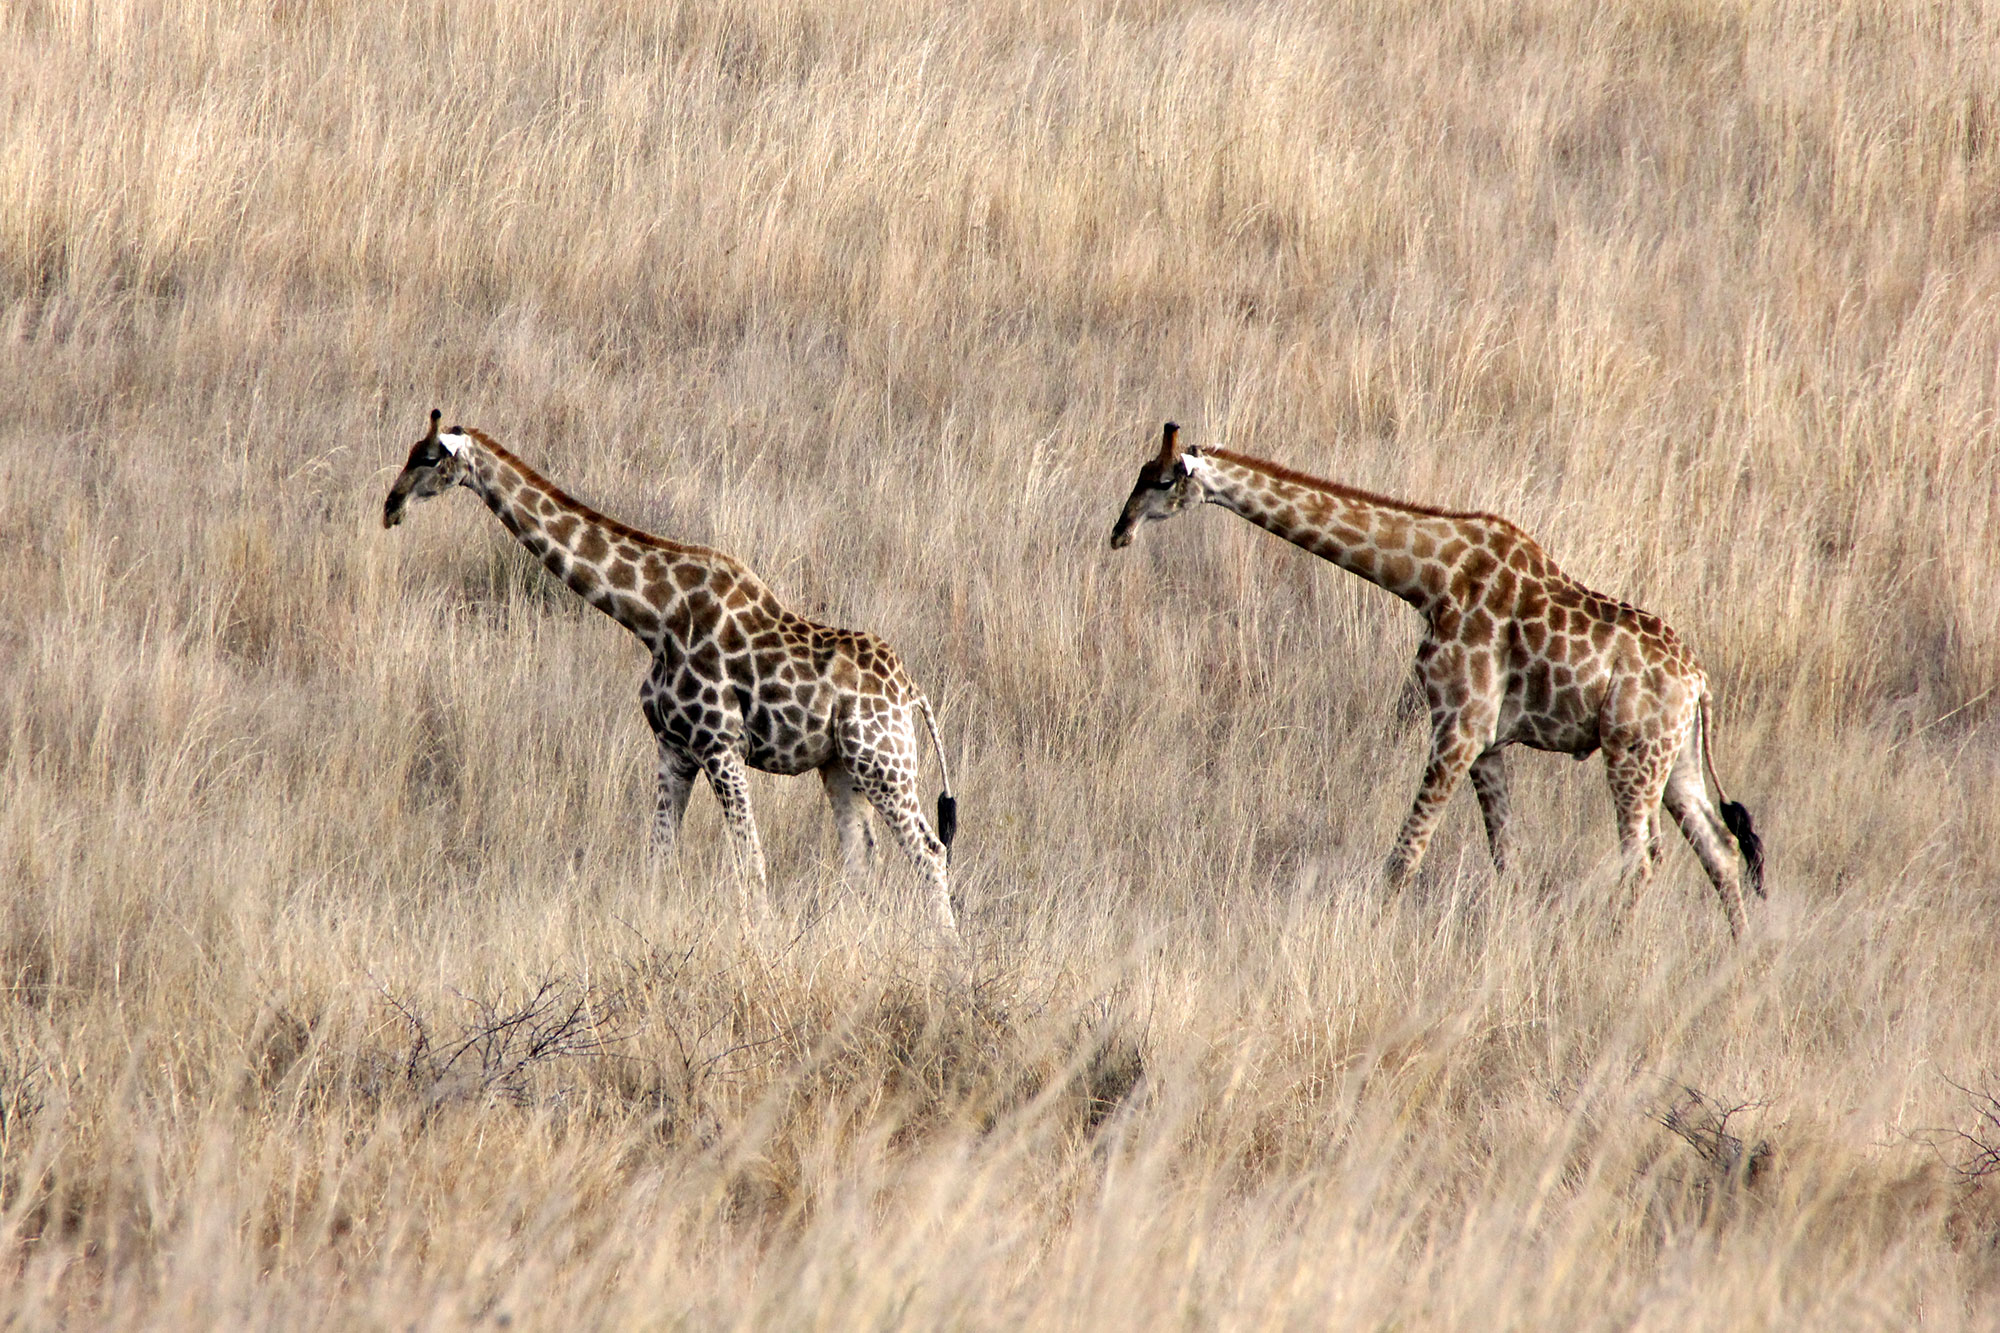 Two giraffes are walking through high brown gras